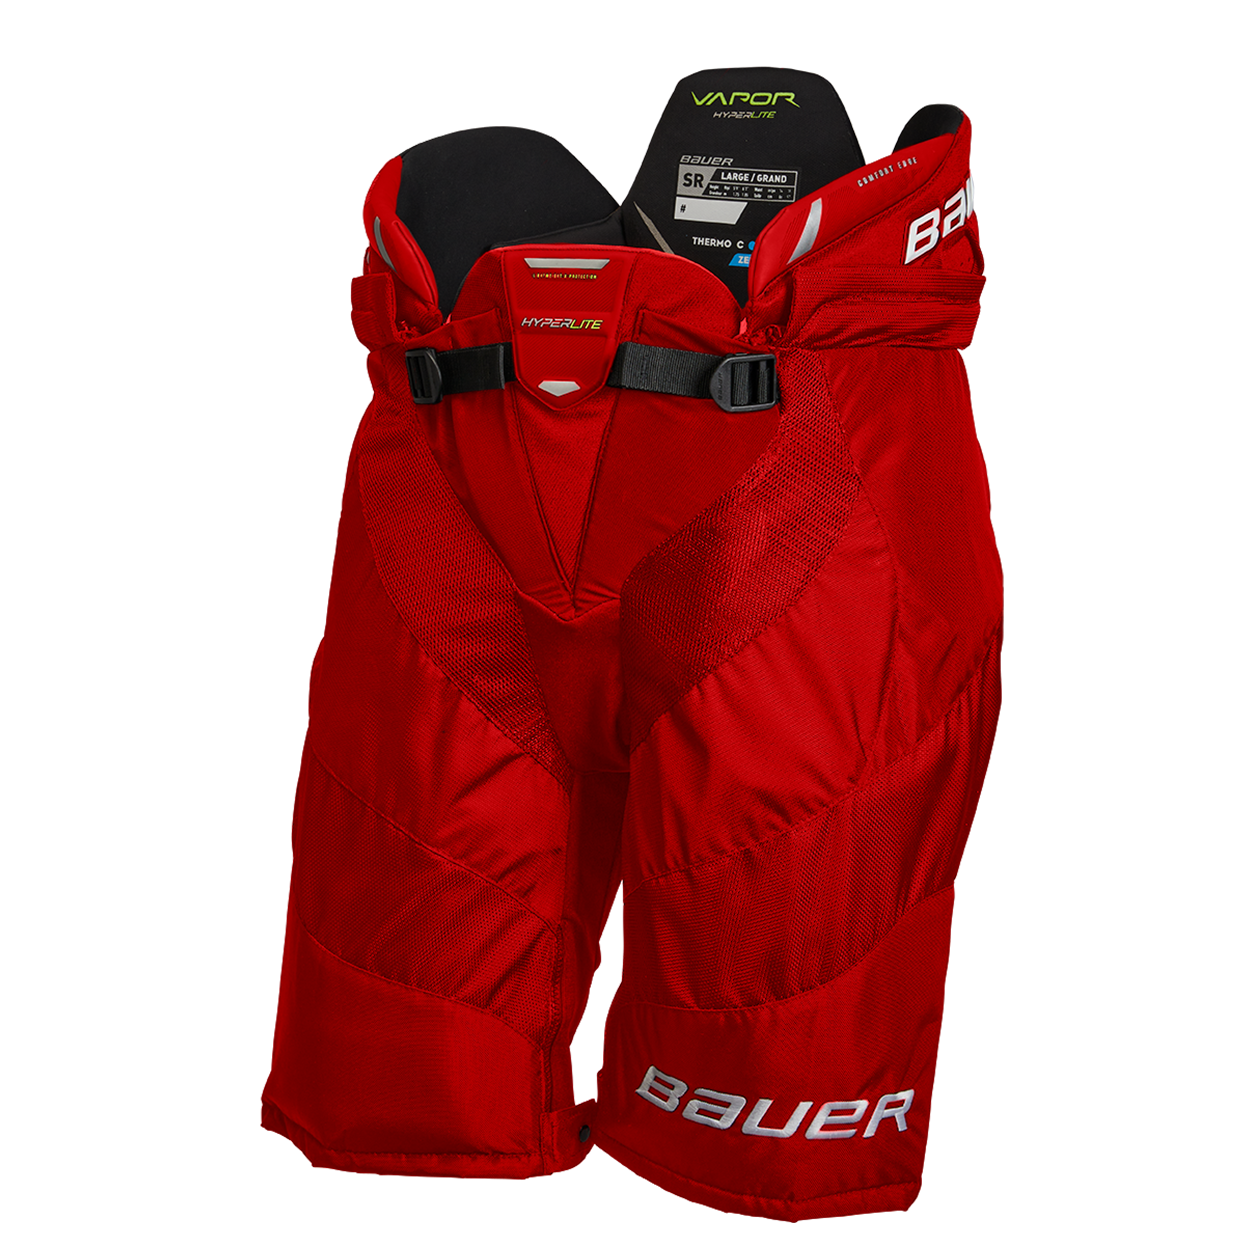 Bauer Nexus 8000 Hockey Pants Size Junior Small.